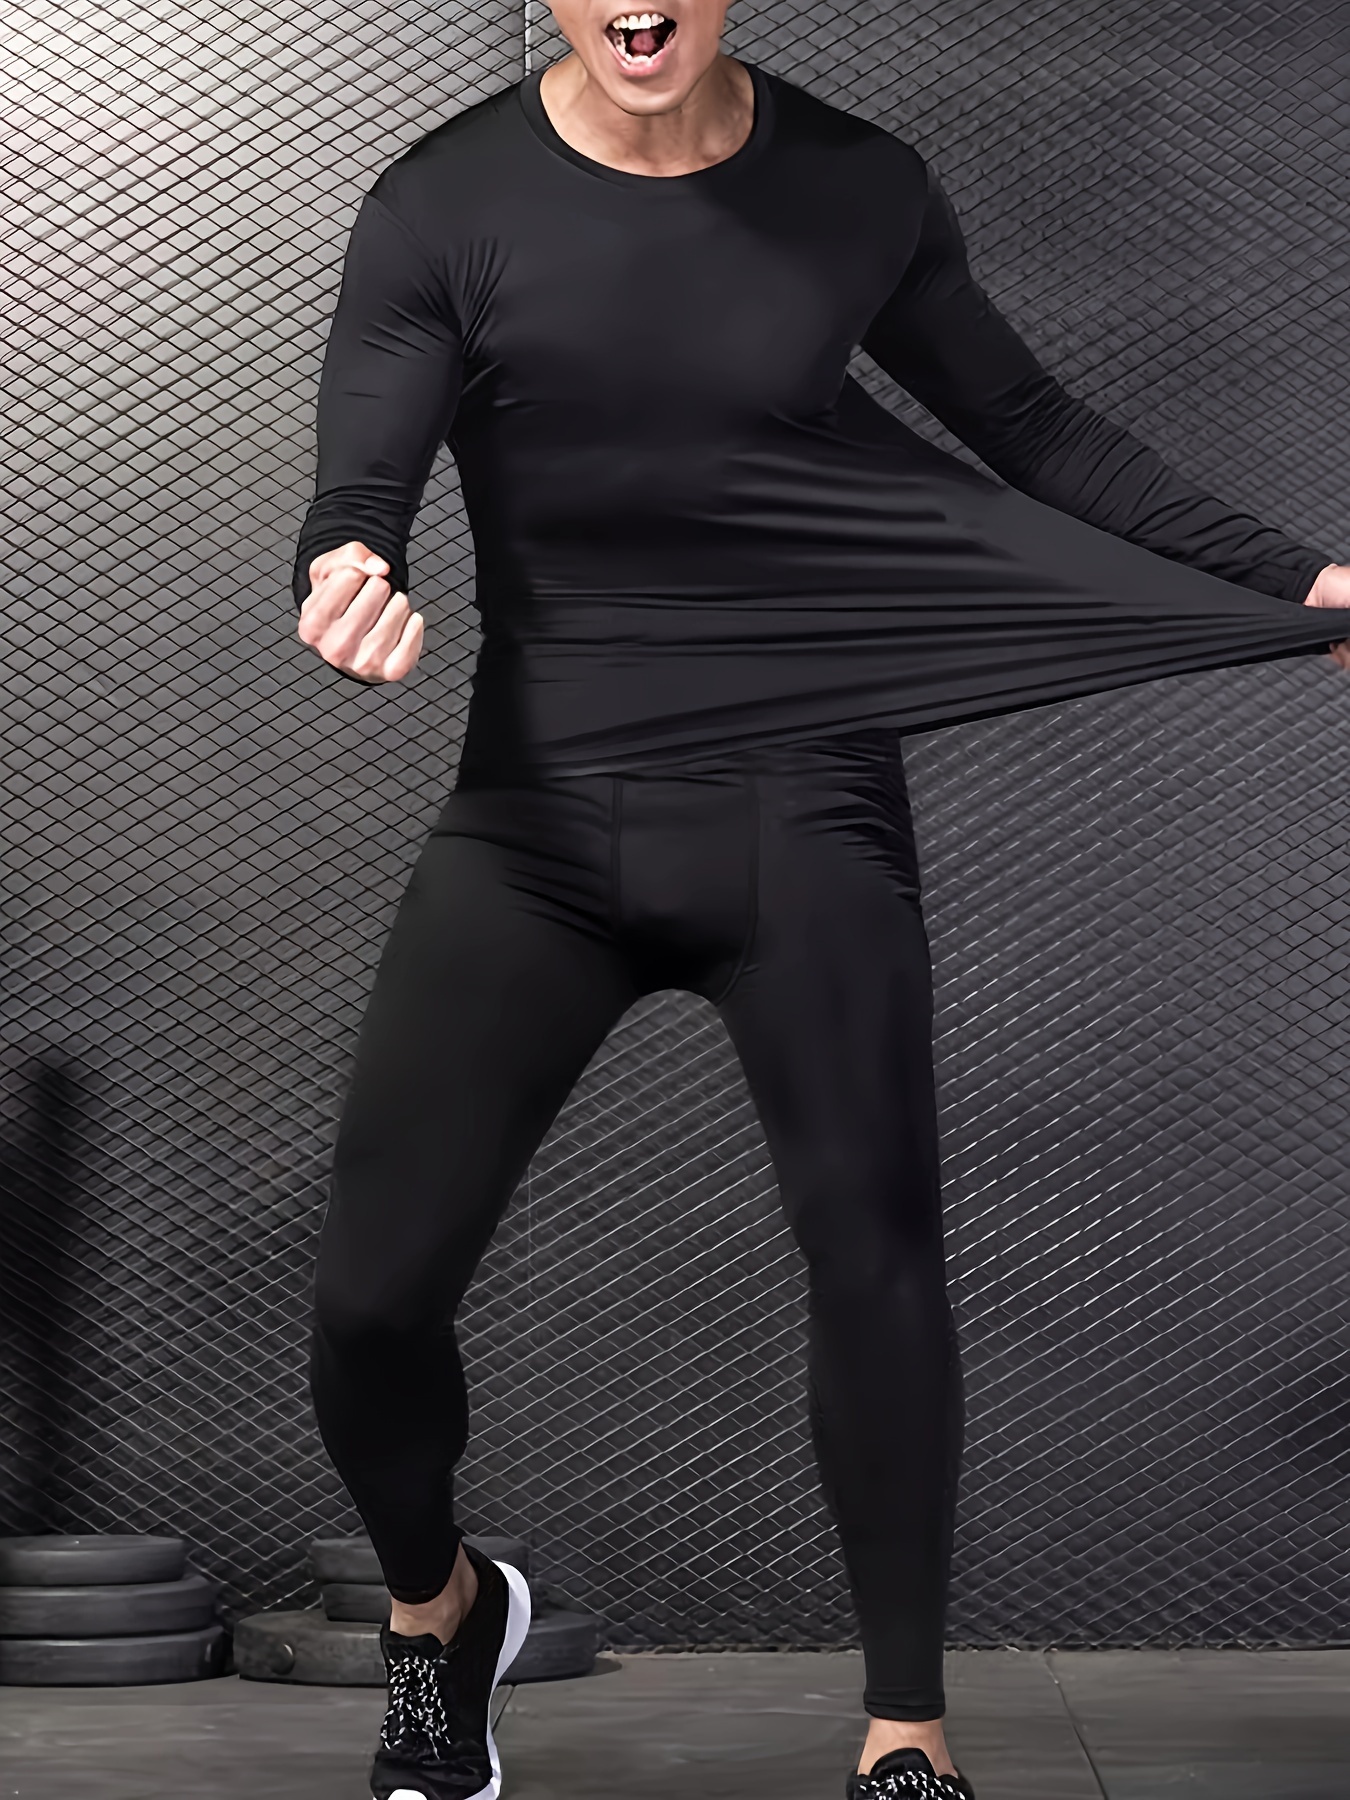 Men's Sports Gym Compression Underwear Fitness Body Shaper Shorts Pants  Leggings